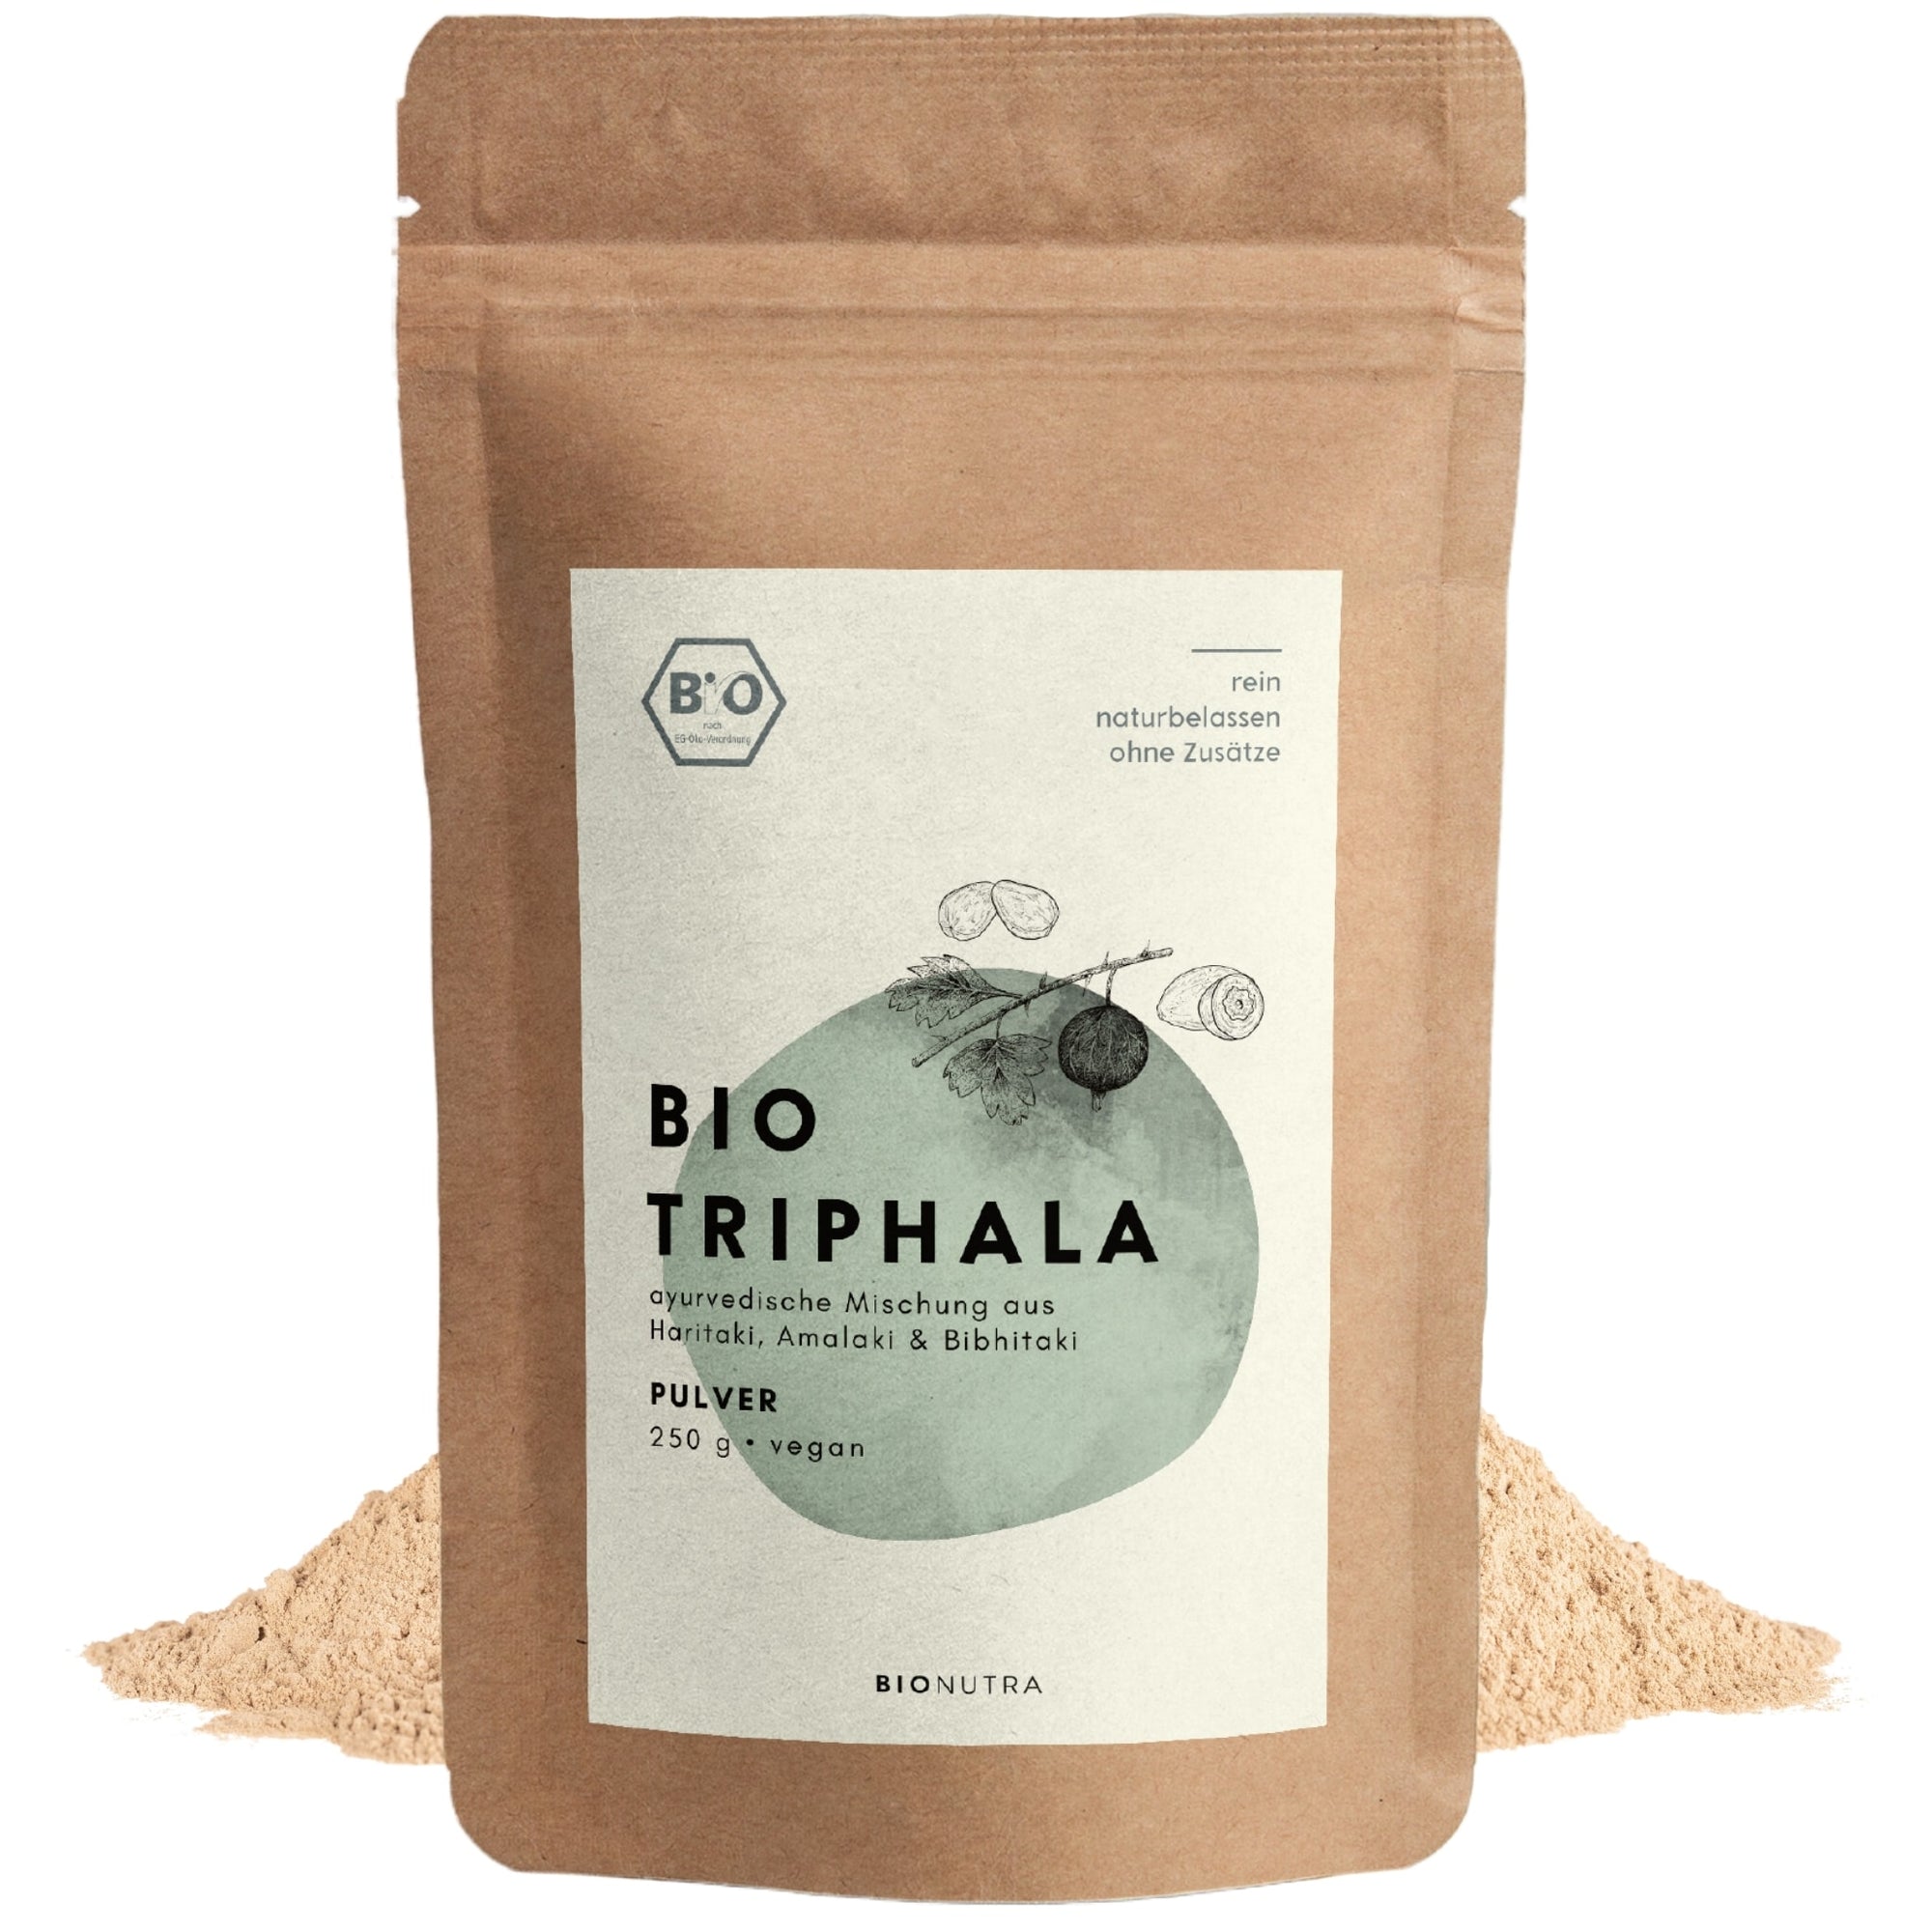 Bio Triphala-Pulver, faire Produktion aus Sri Lanka